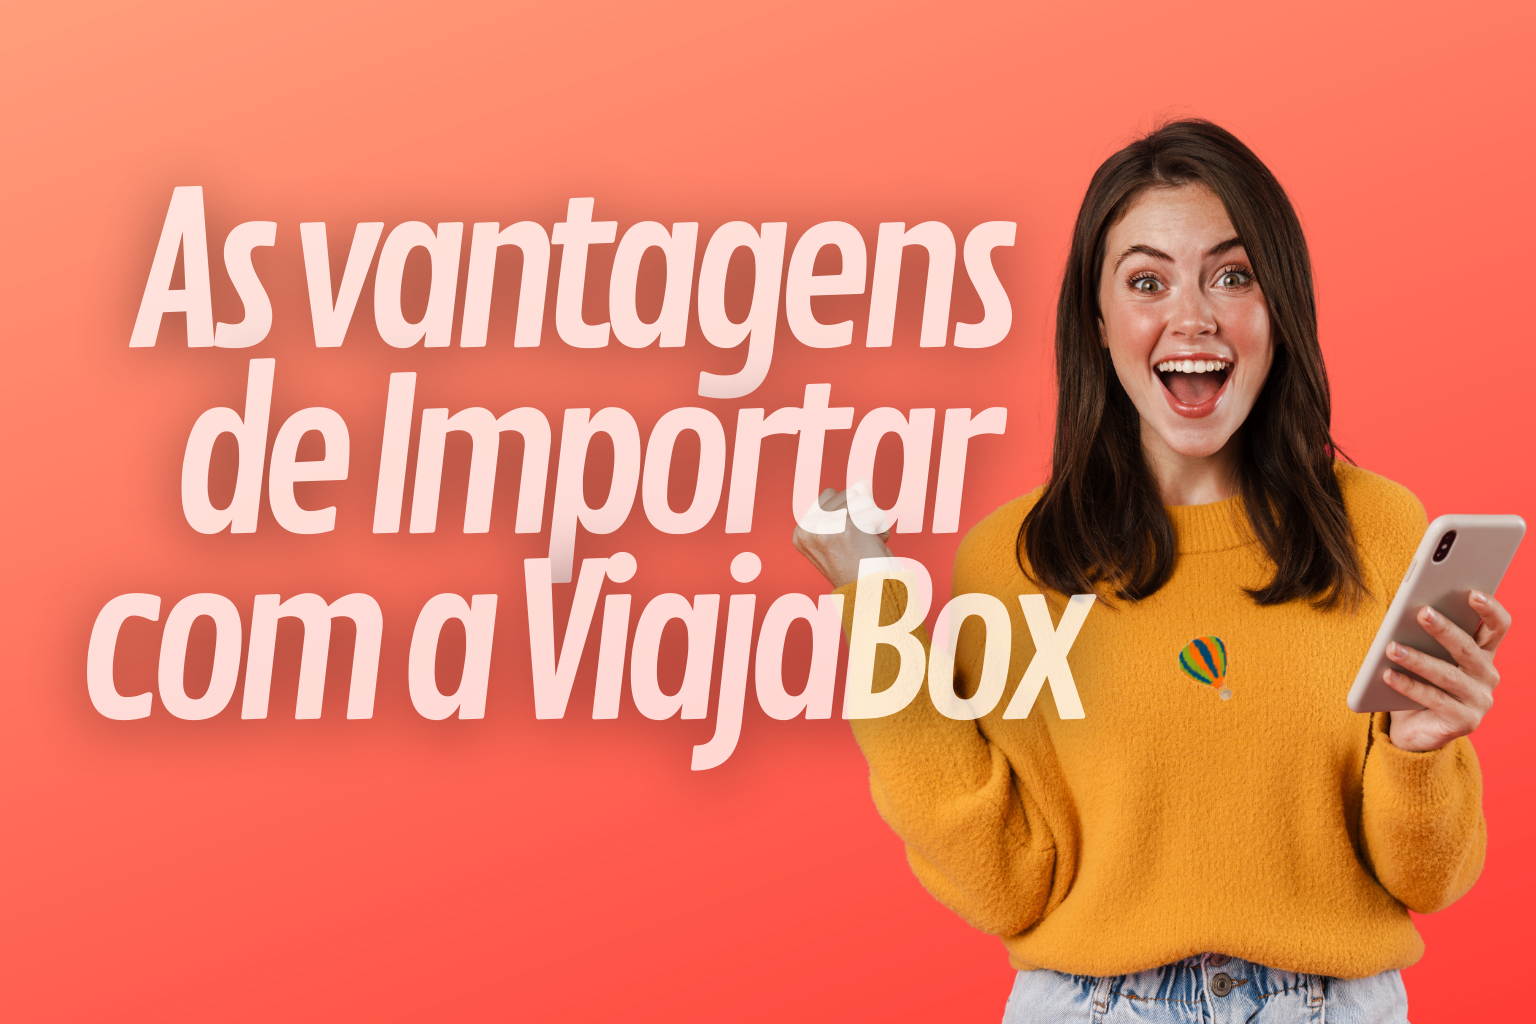 Viajaboxの1アカウントのみで、アメリカから安全かつ簡単に輸入する方法